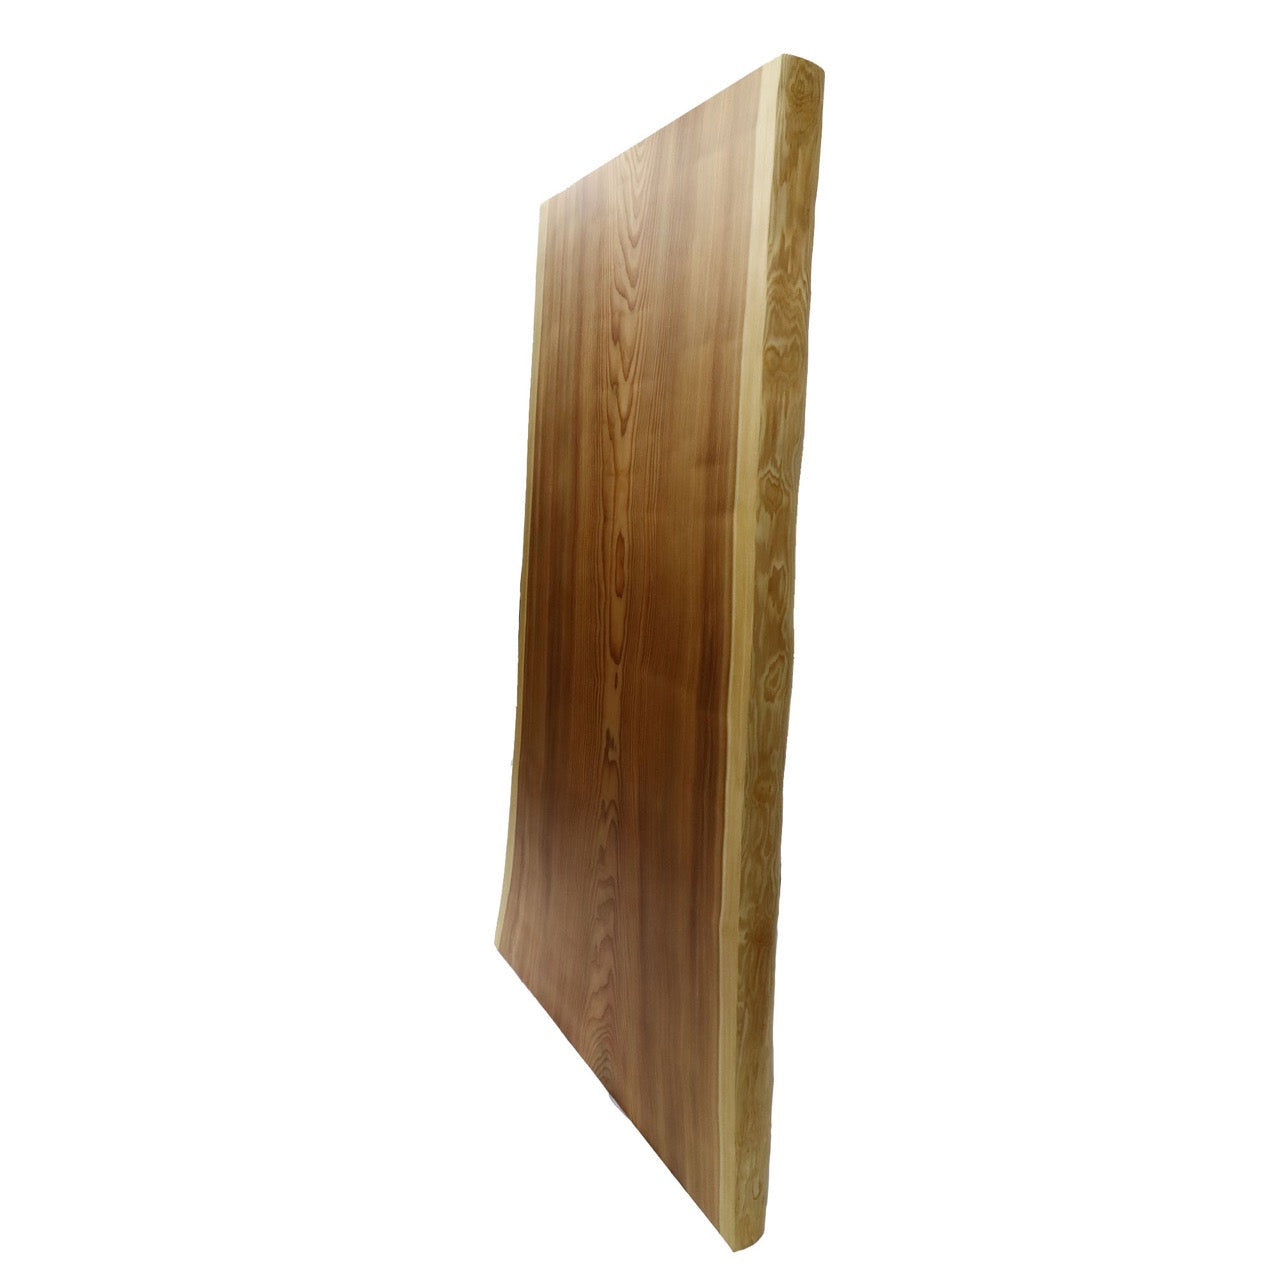 A0010 吉野杉無垢一枚板 テーブル天板 1,840mm×770mm×75mm